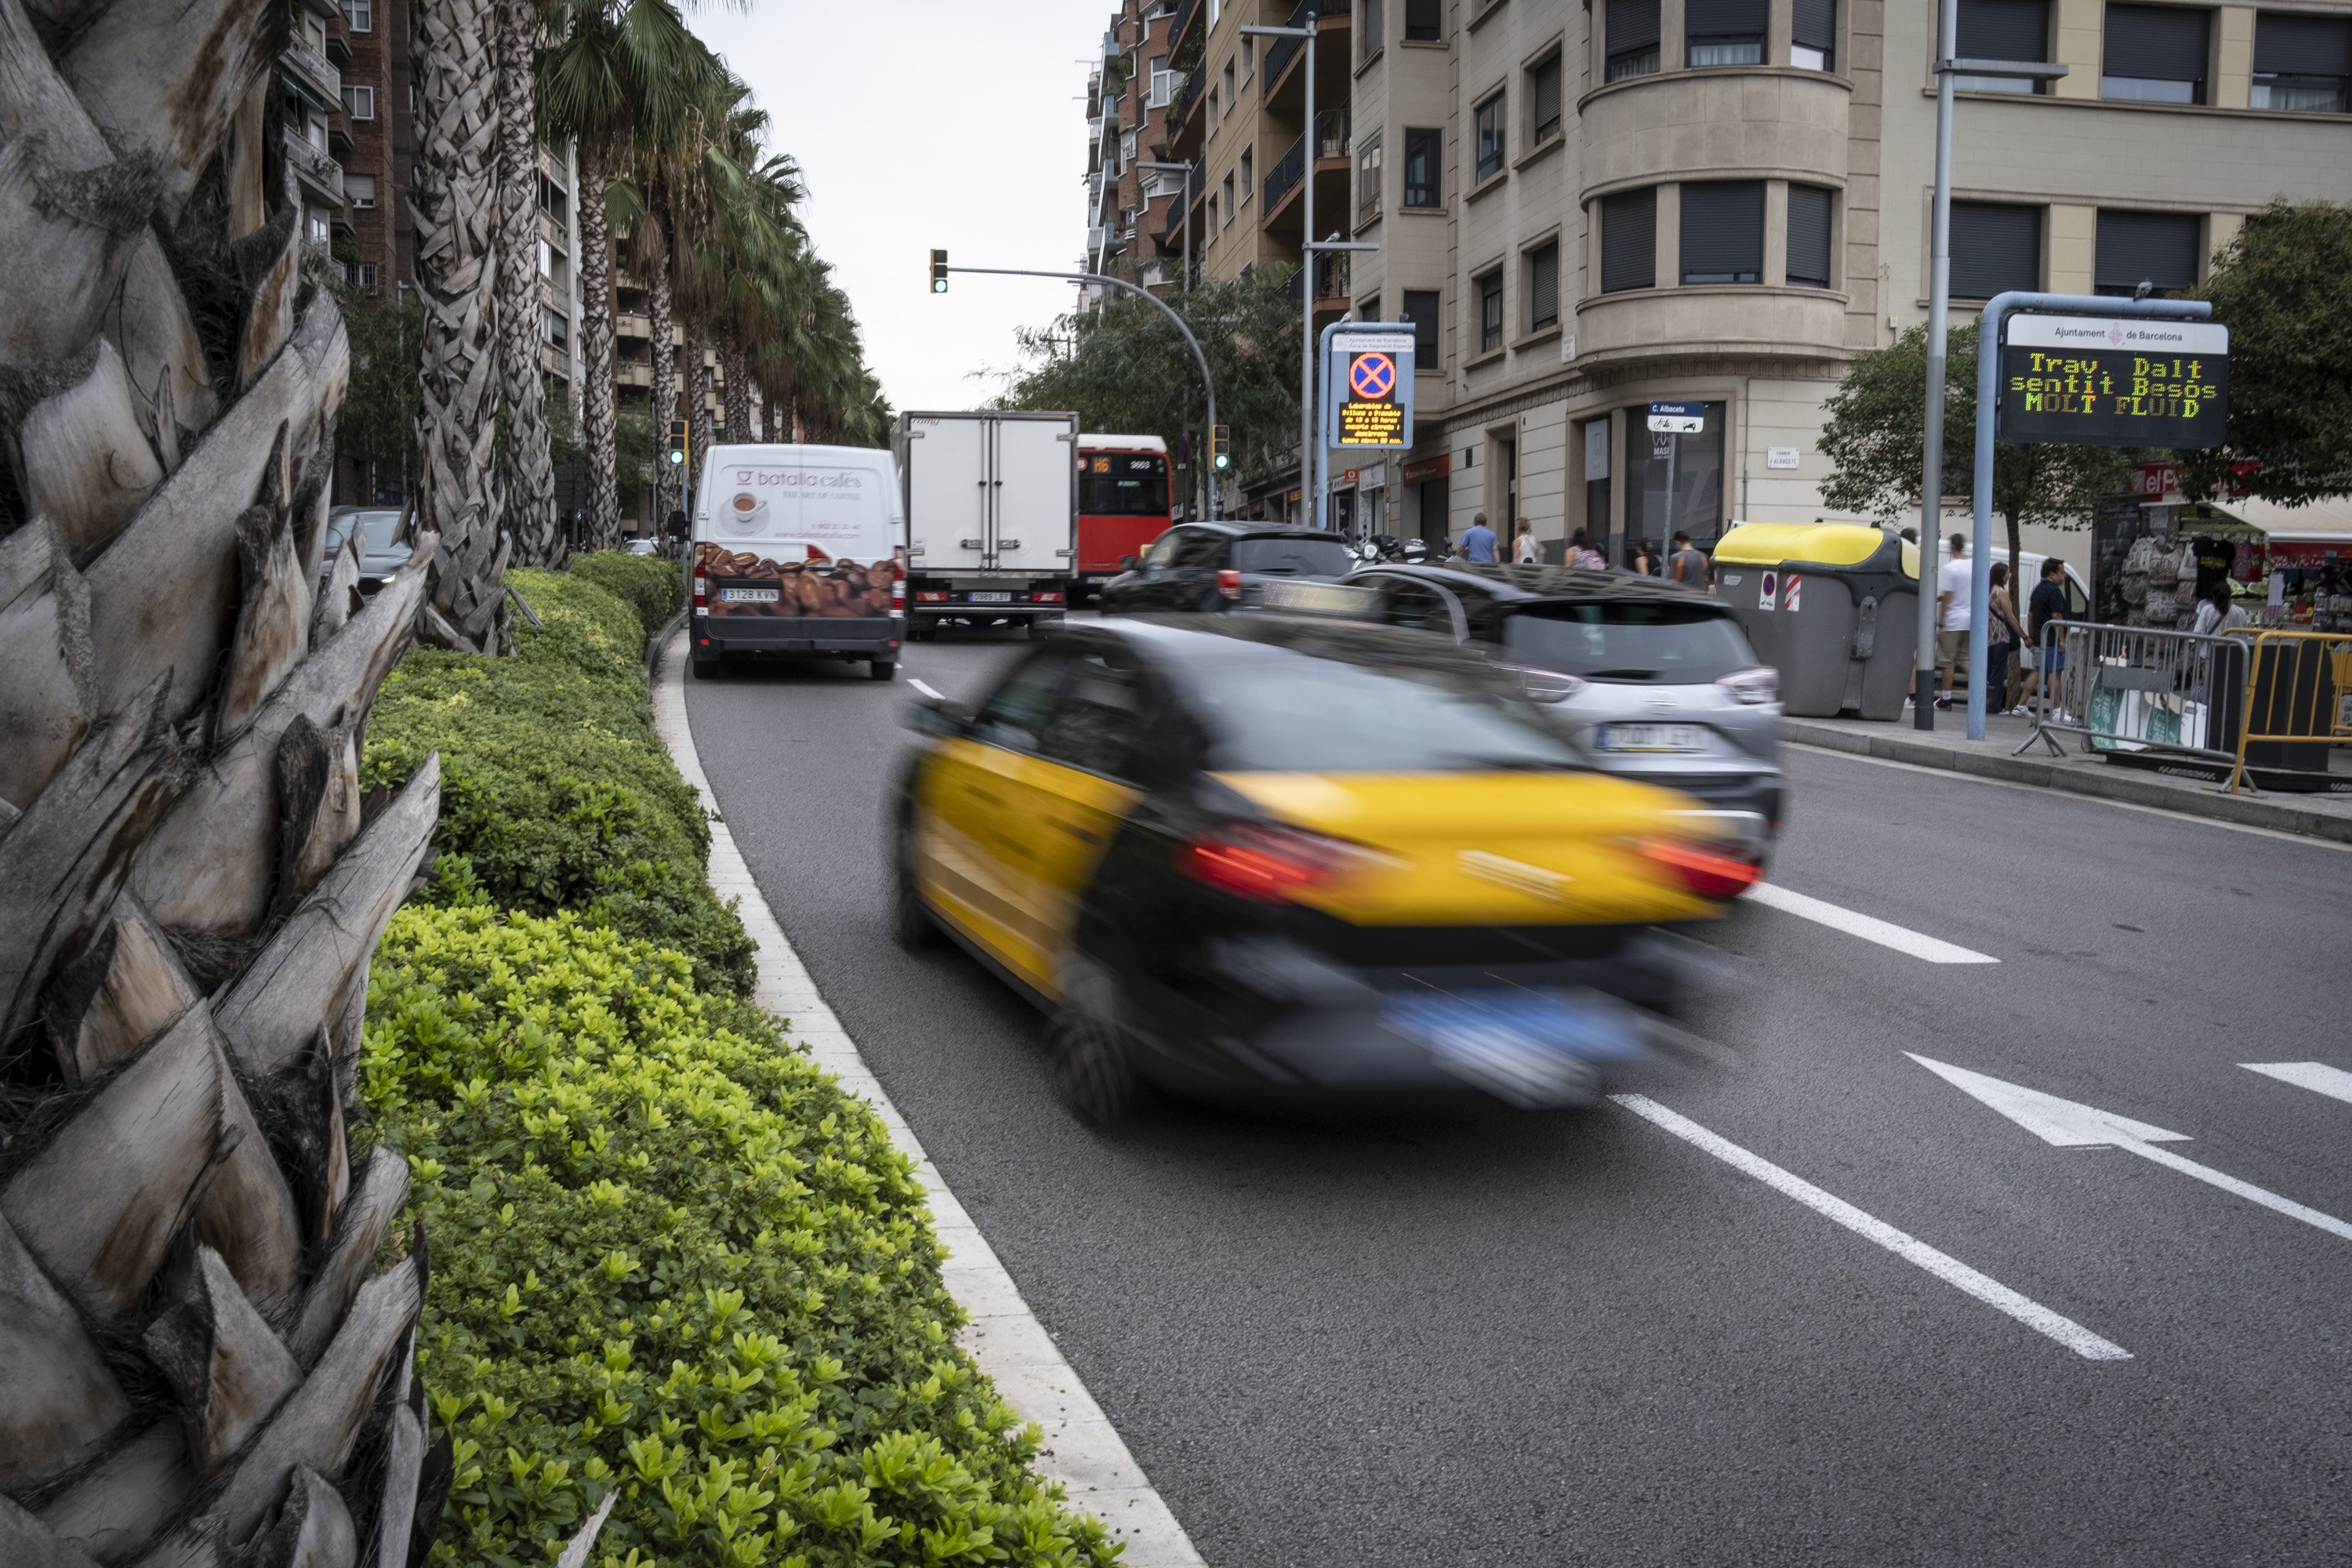 Recurs transit, taxi ronda general mitre / Foto: Carlos Baglietto